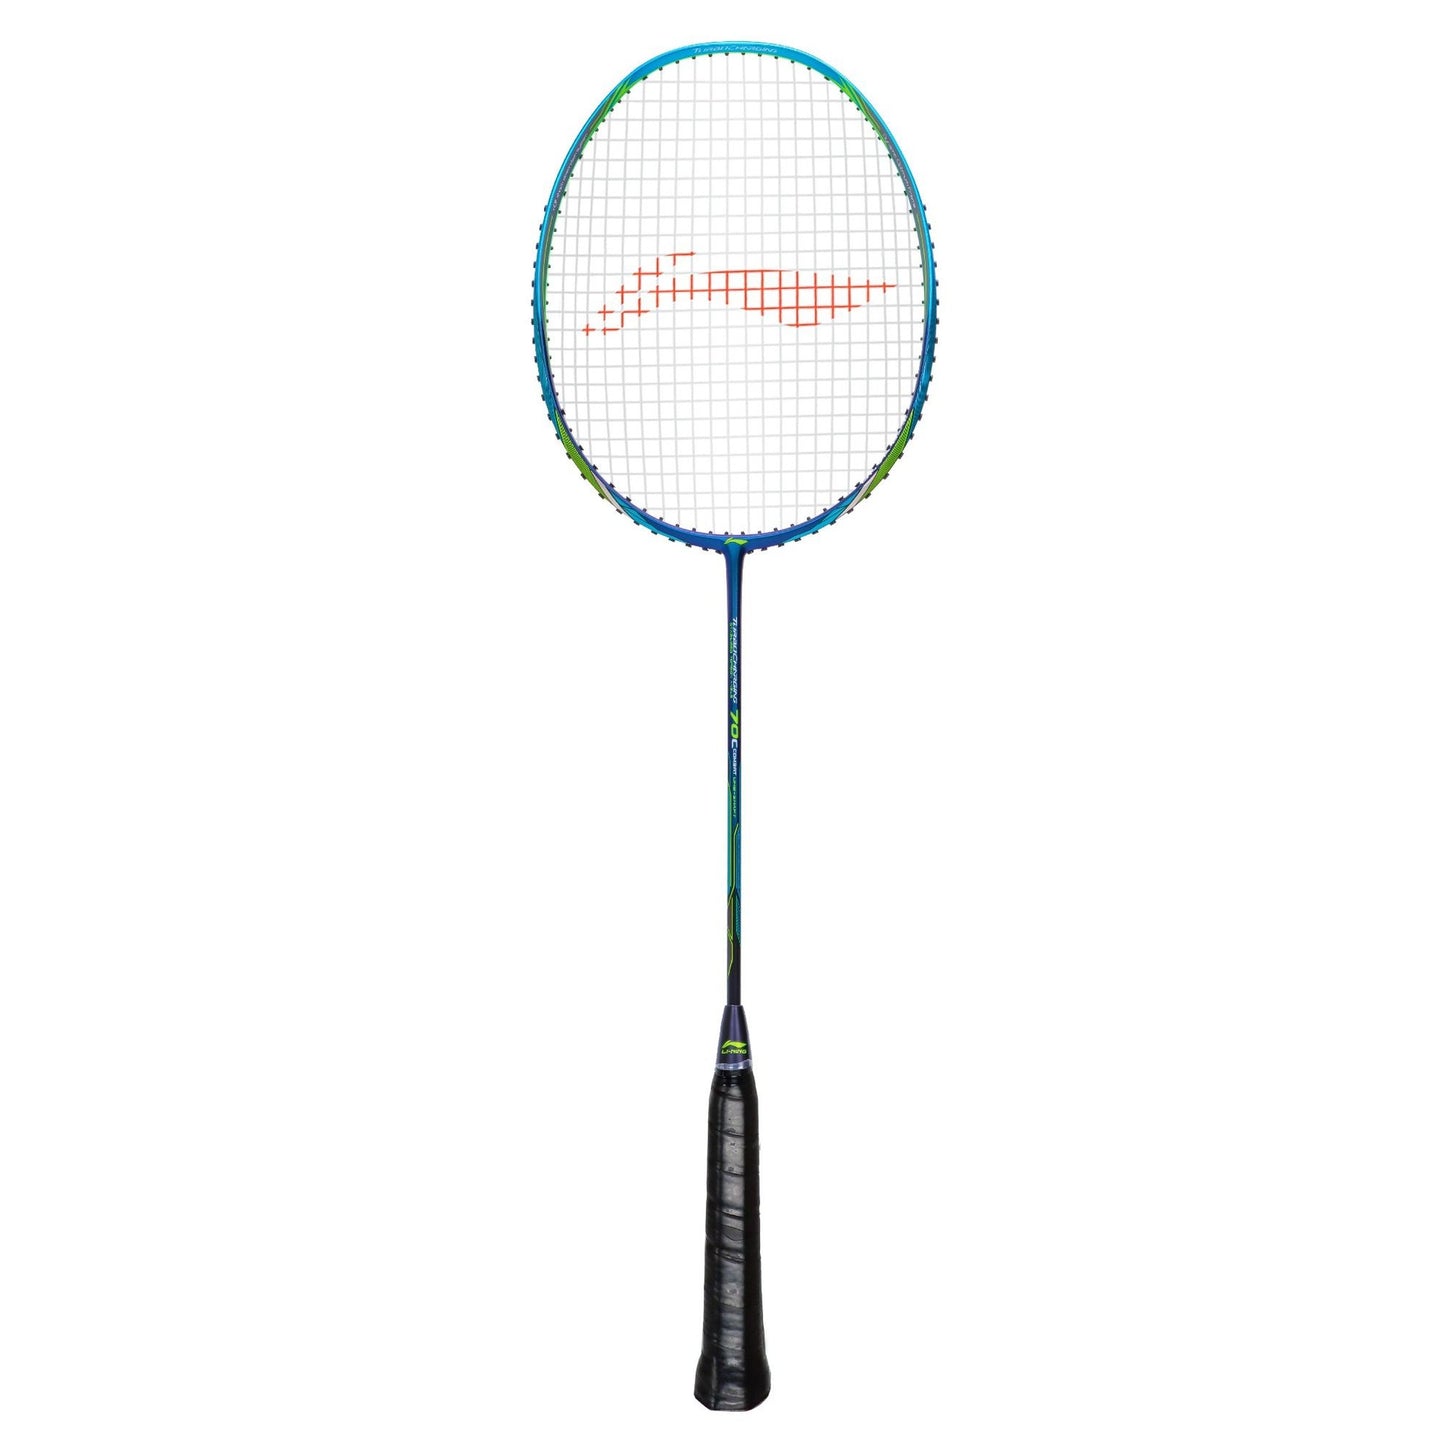 Li-Ning Turbo Charging 70C Combat Carbon Fibre Badminton Racquet - Glamour Blue - Best Price online Prokicksports.com